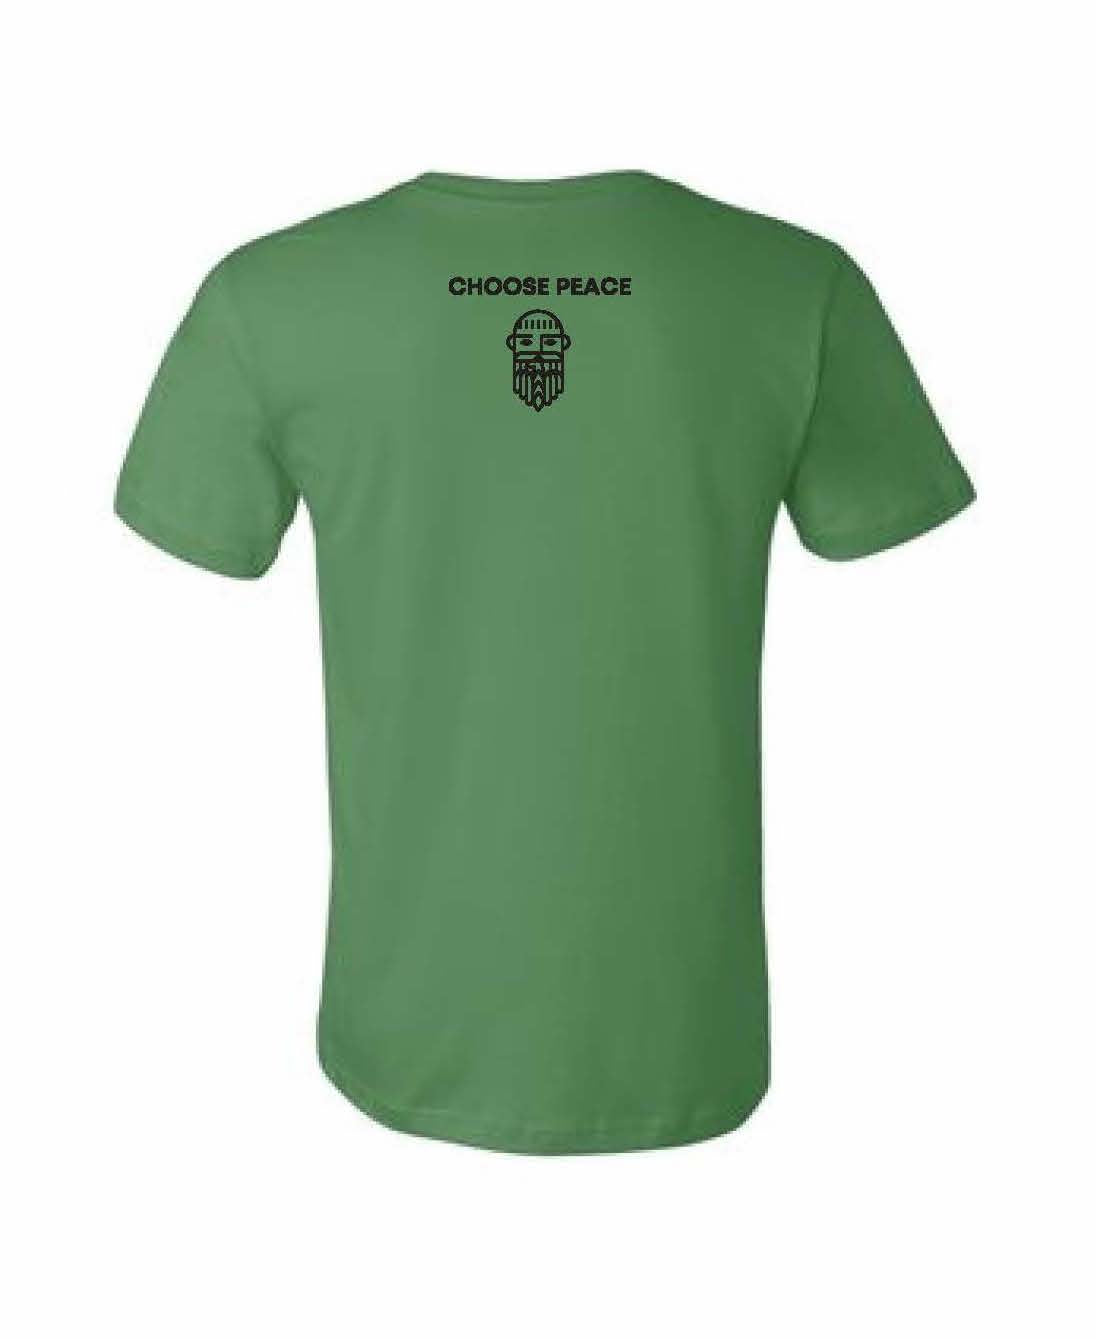 "Choose Peace" T-Shirt in Leaf Green